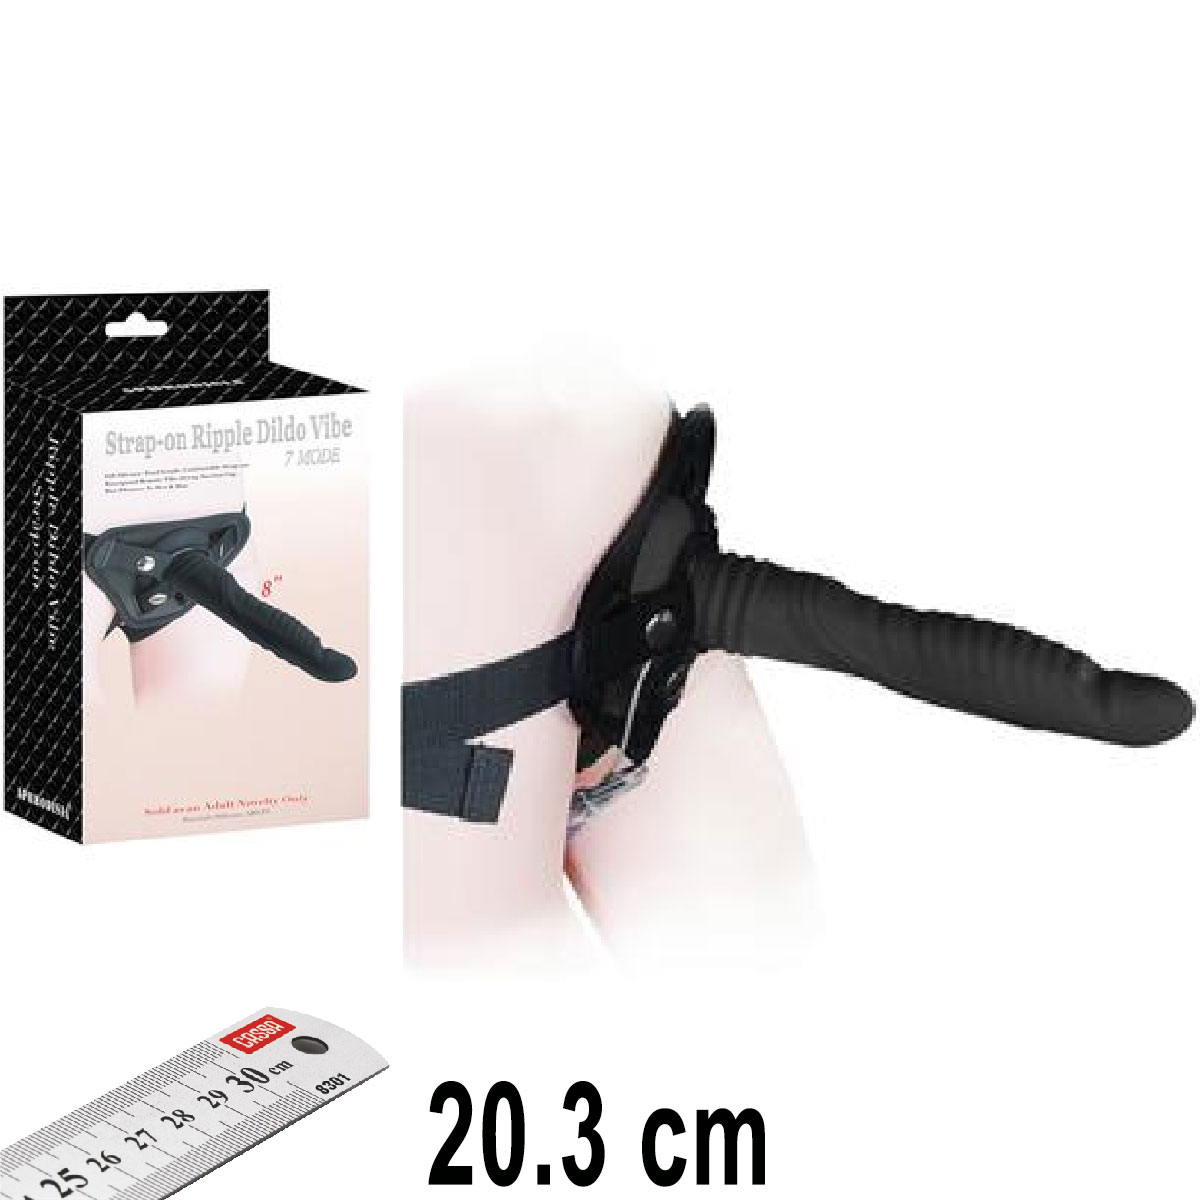 Strap-on Ripple Dildo Vibe Siyah Renk 20.3 cm Boy 7 Mod Titresimli Et Dokulu Silikondan Protez Penis AL-92008